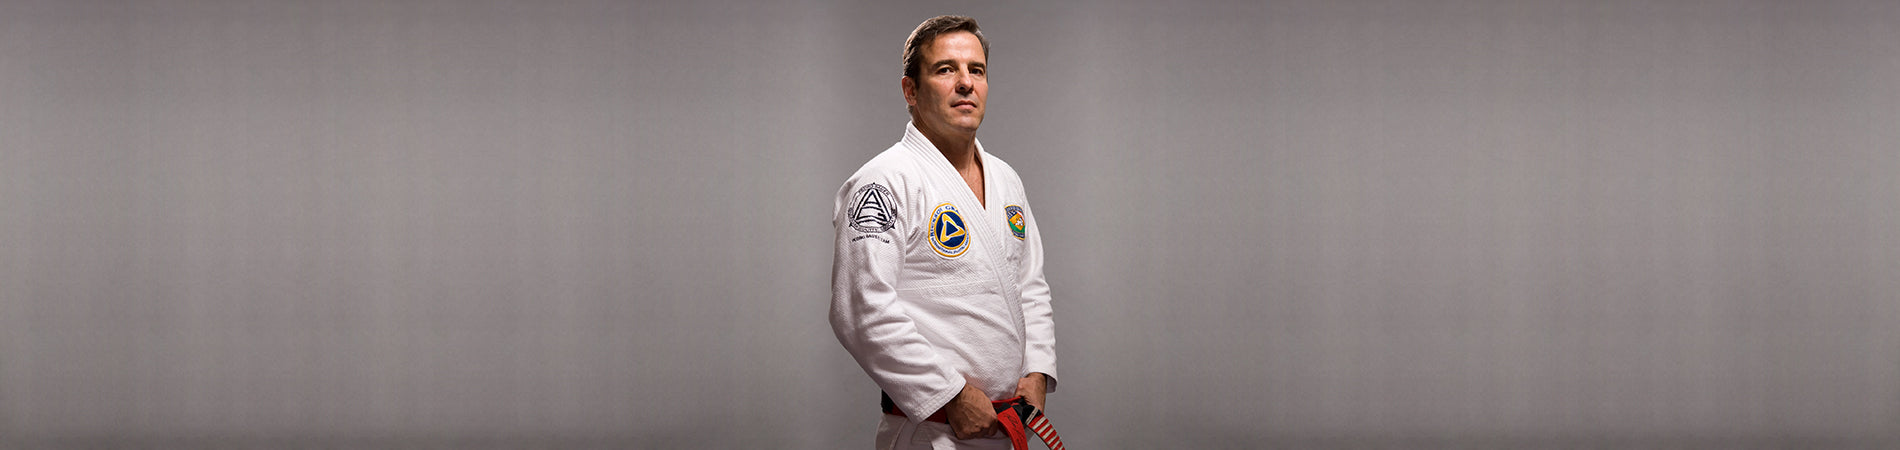 Pedro Sauer - 8th Degree Coral Belt Brazilian Jiu-Jitsu Instructor